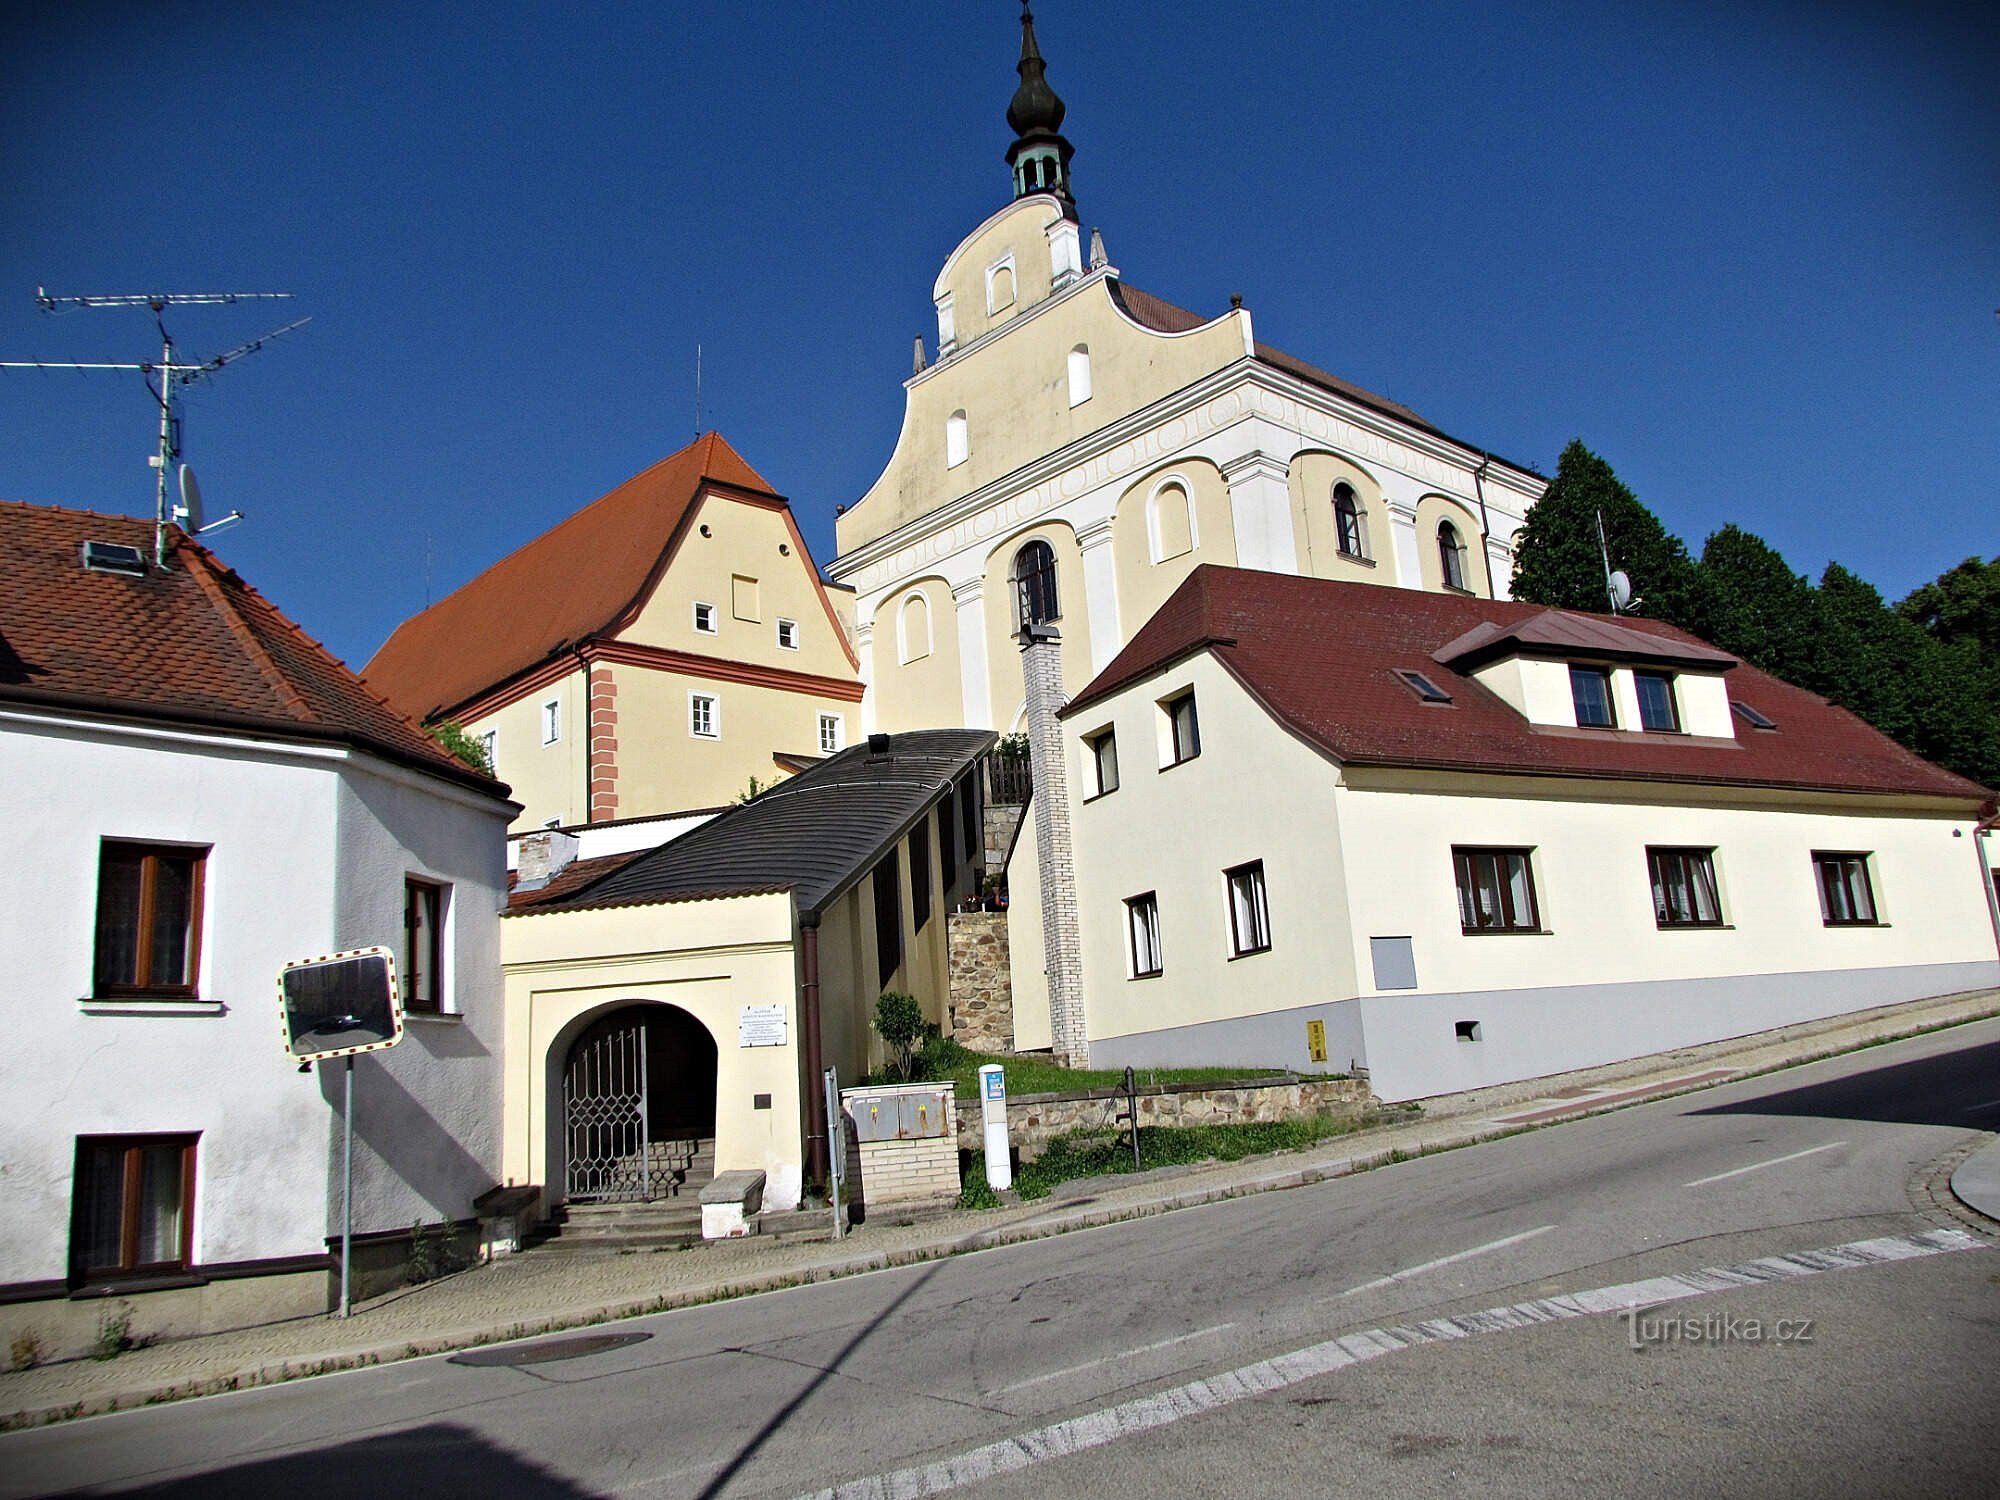 Jemnická通りから見た教会